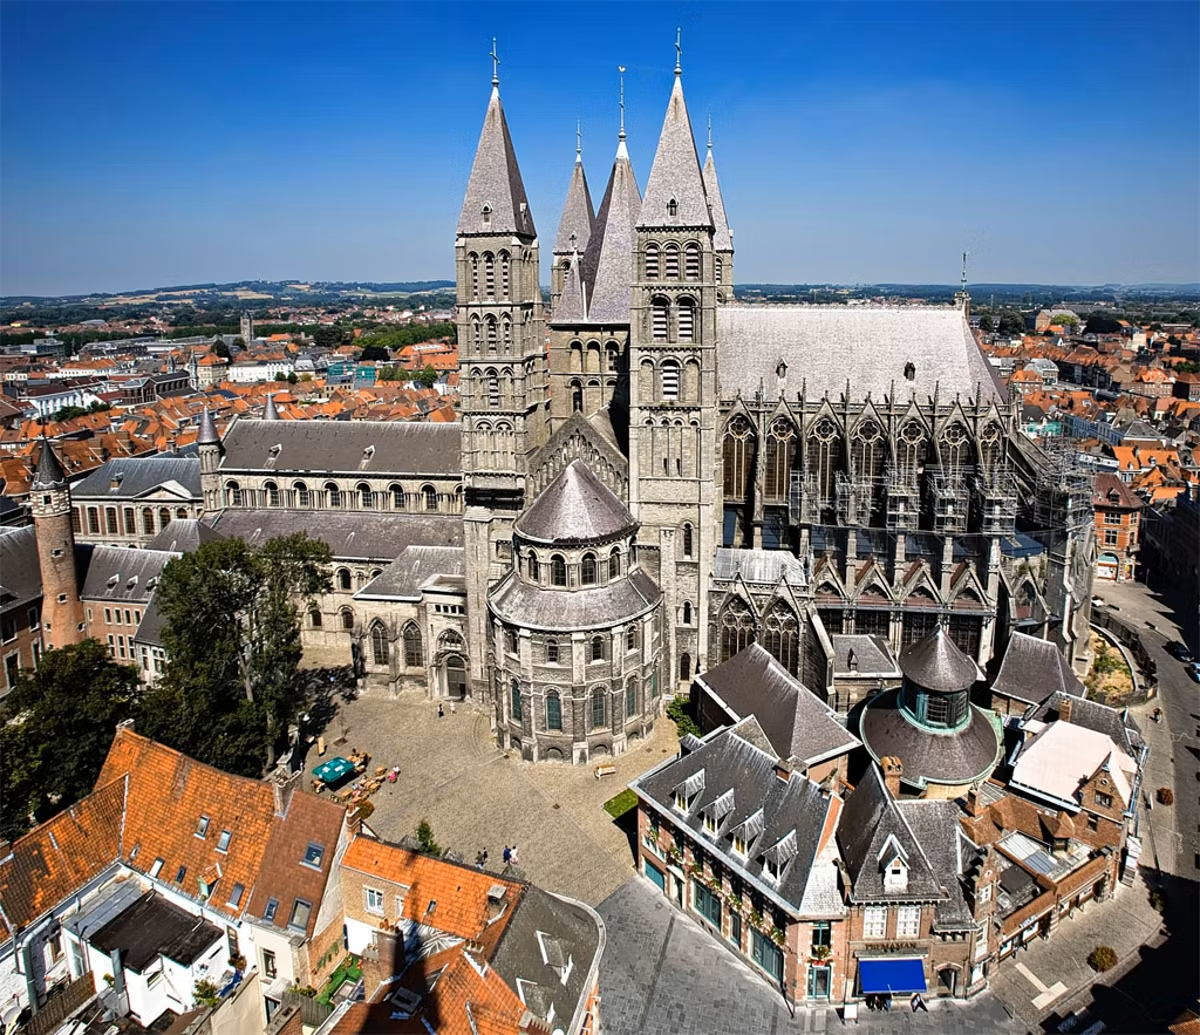 Cathedral of Tournai